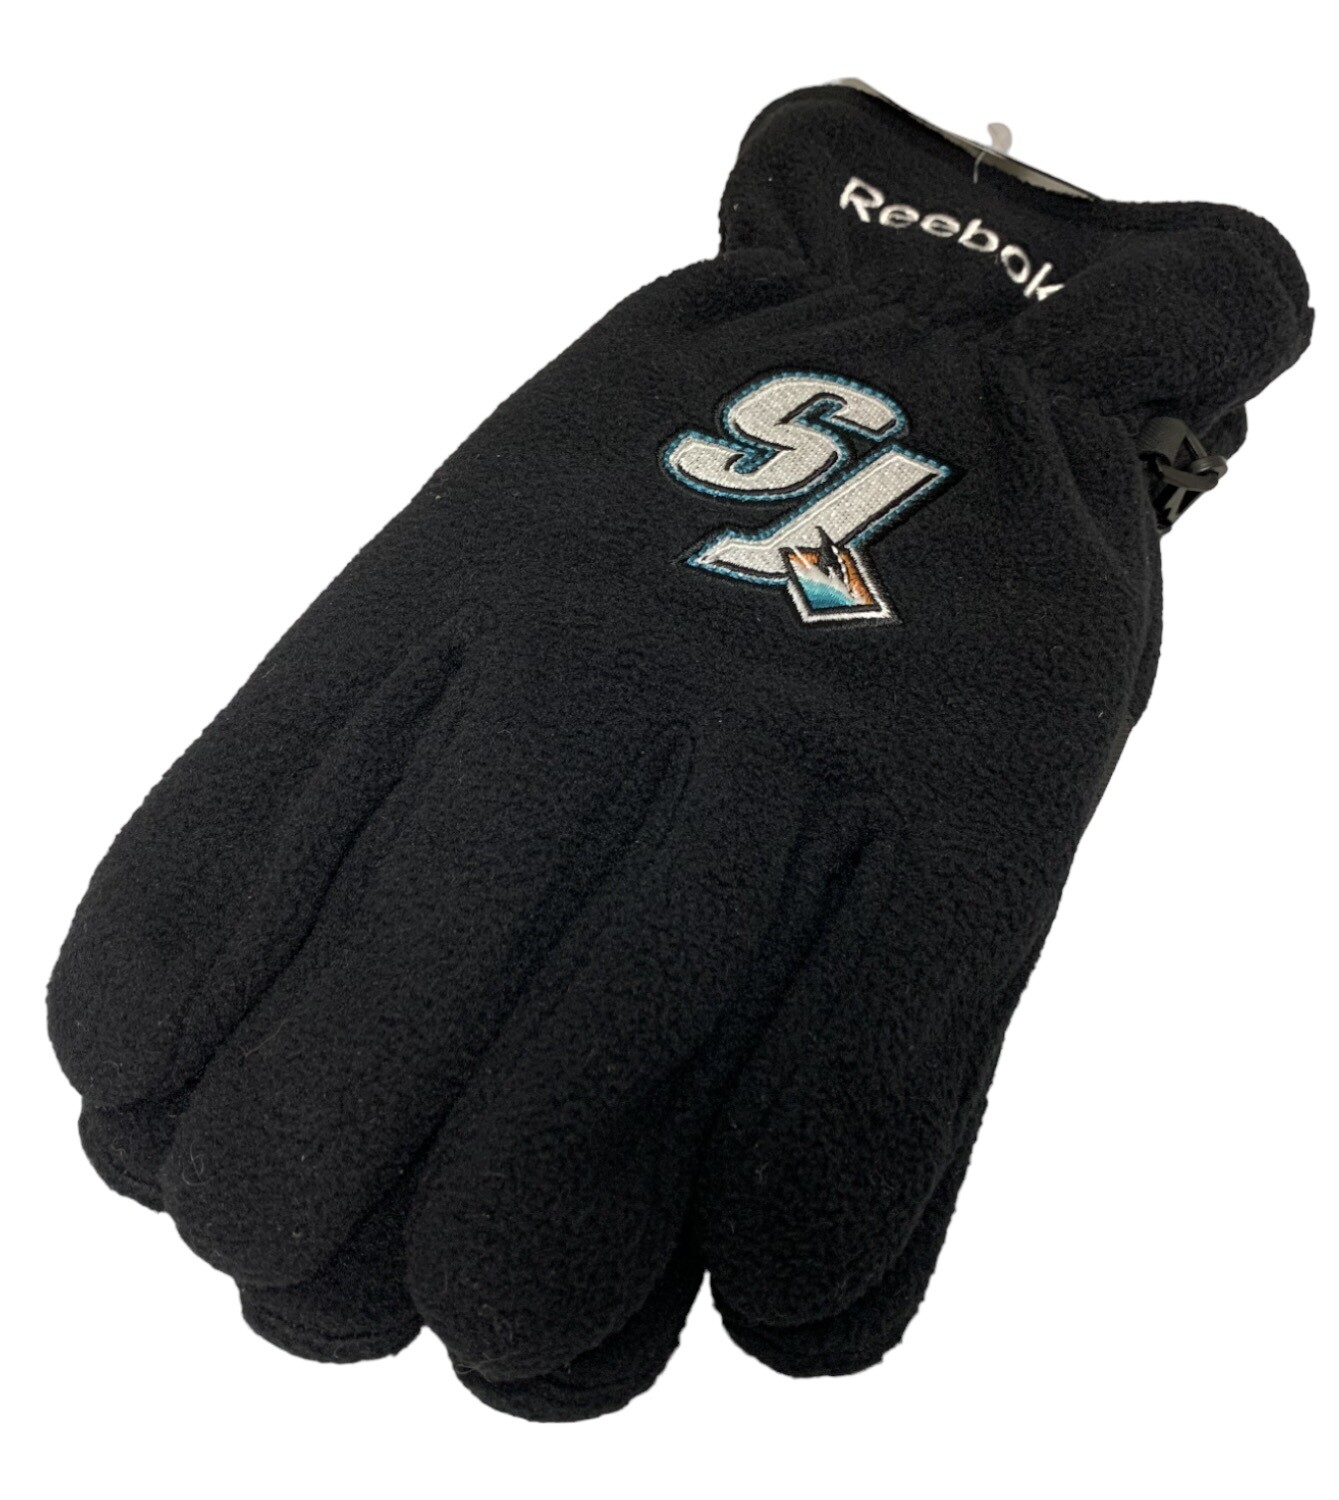 952-2 Licensed Team Winter Gloves